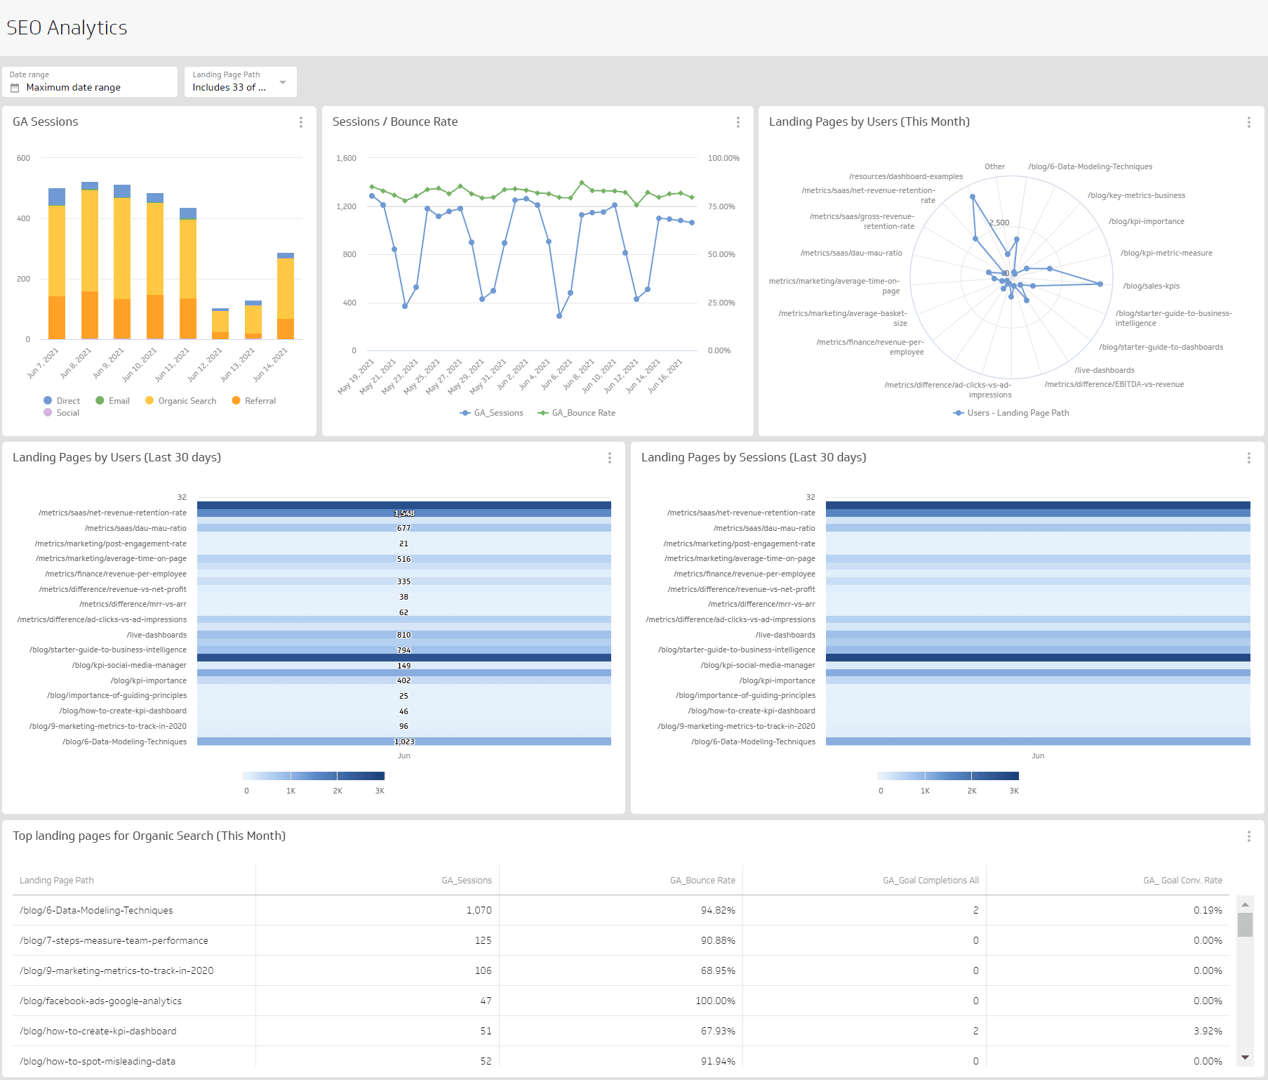 Related Dashboard Examples - SEO Analytics Dashboard